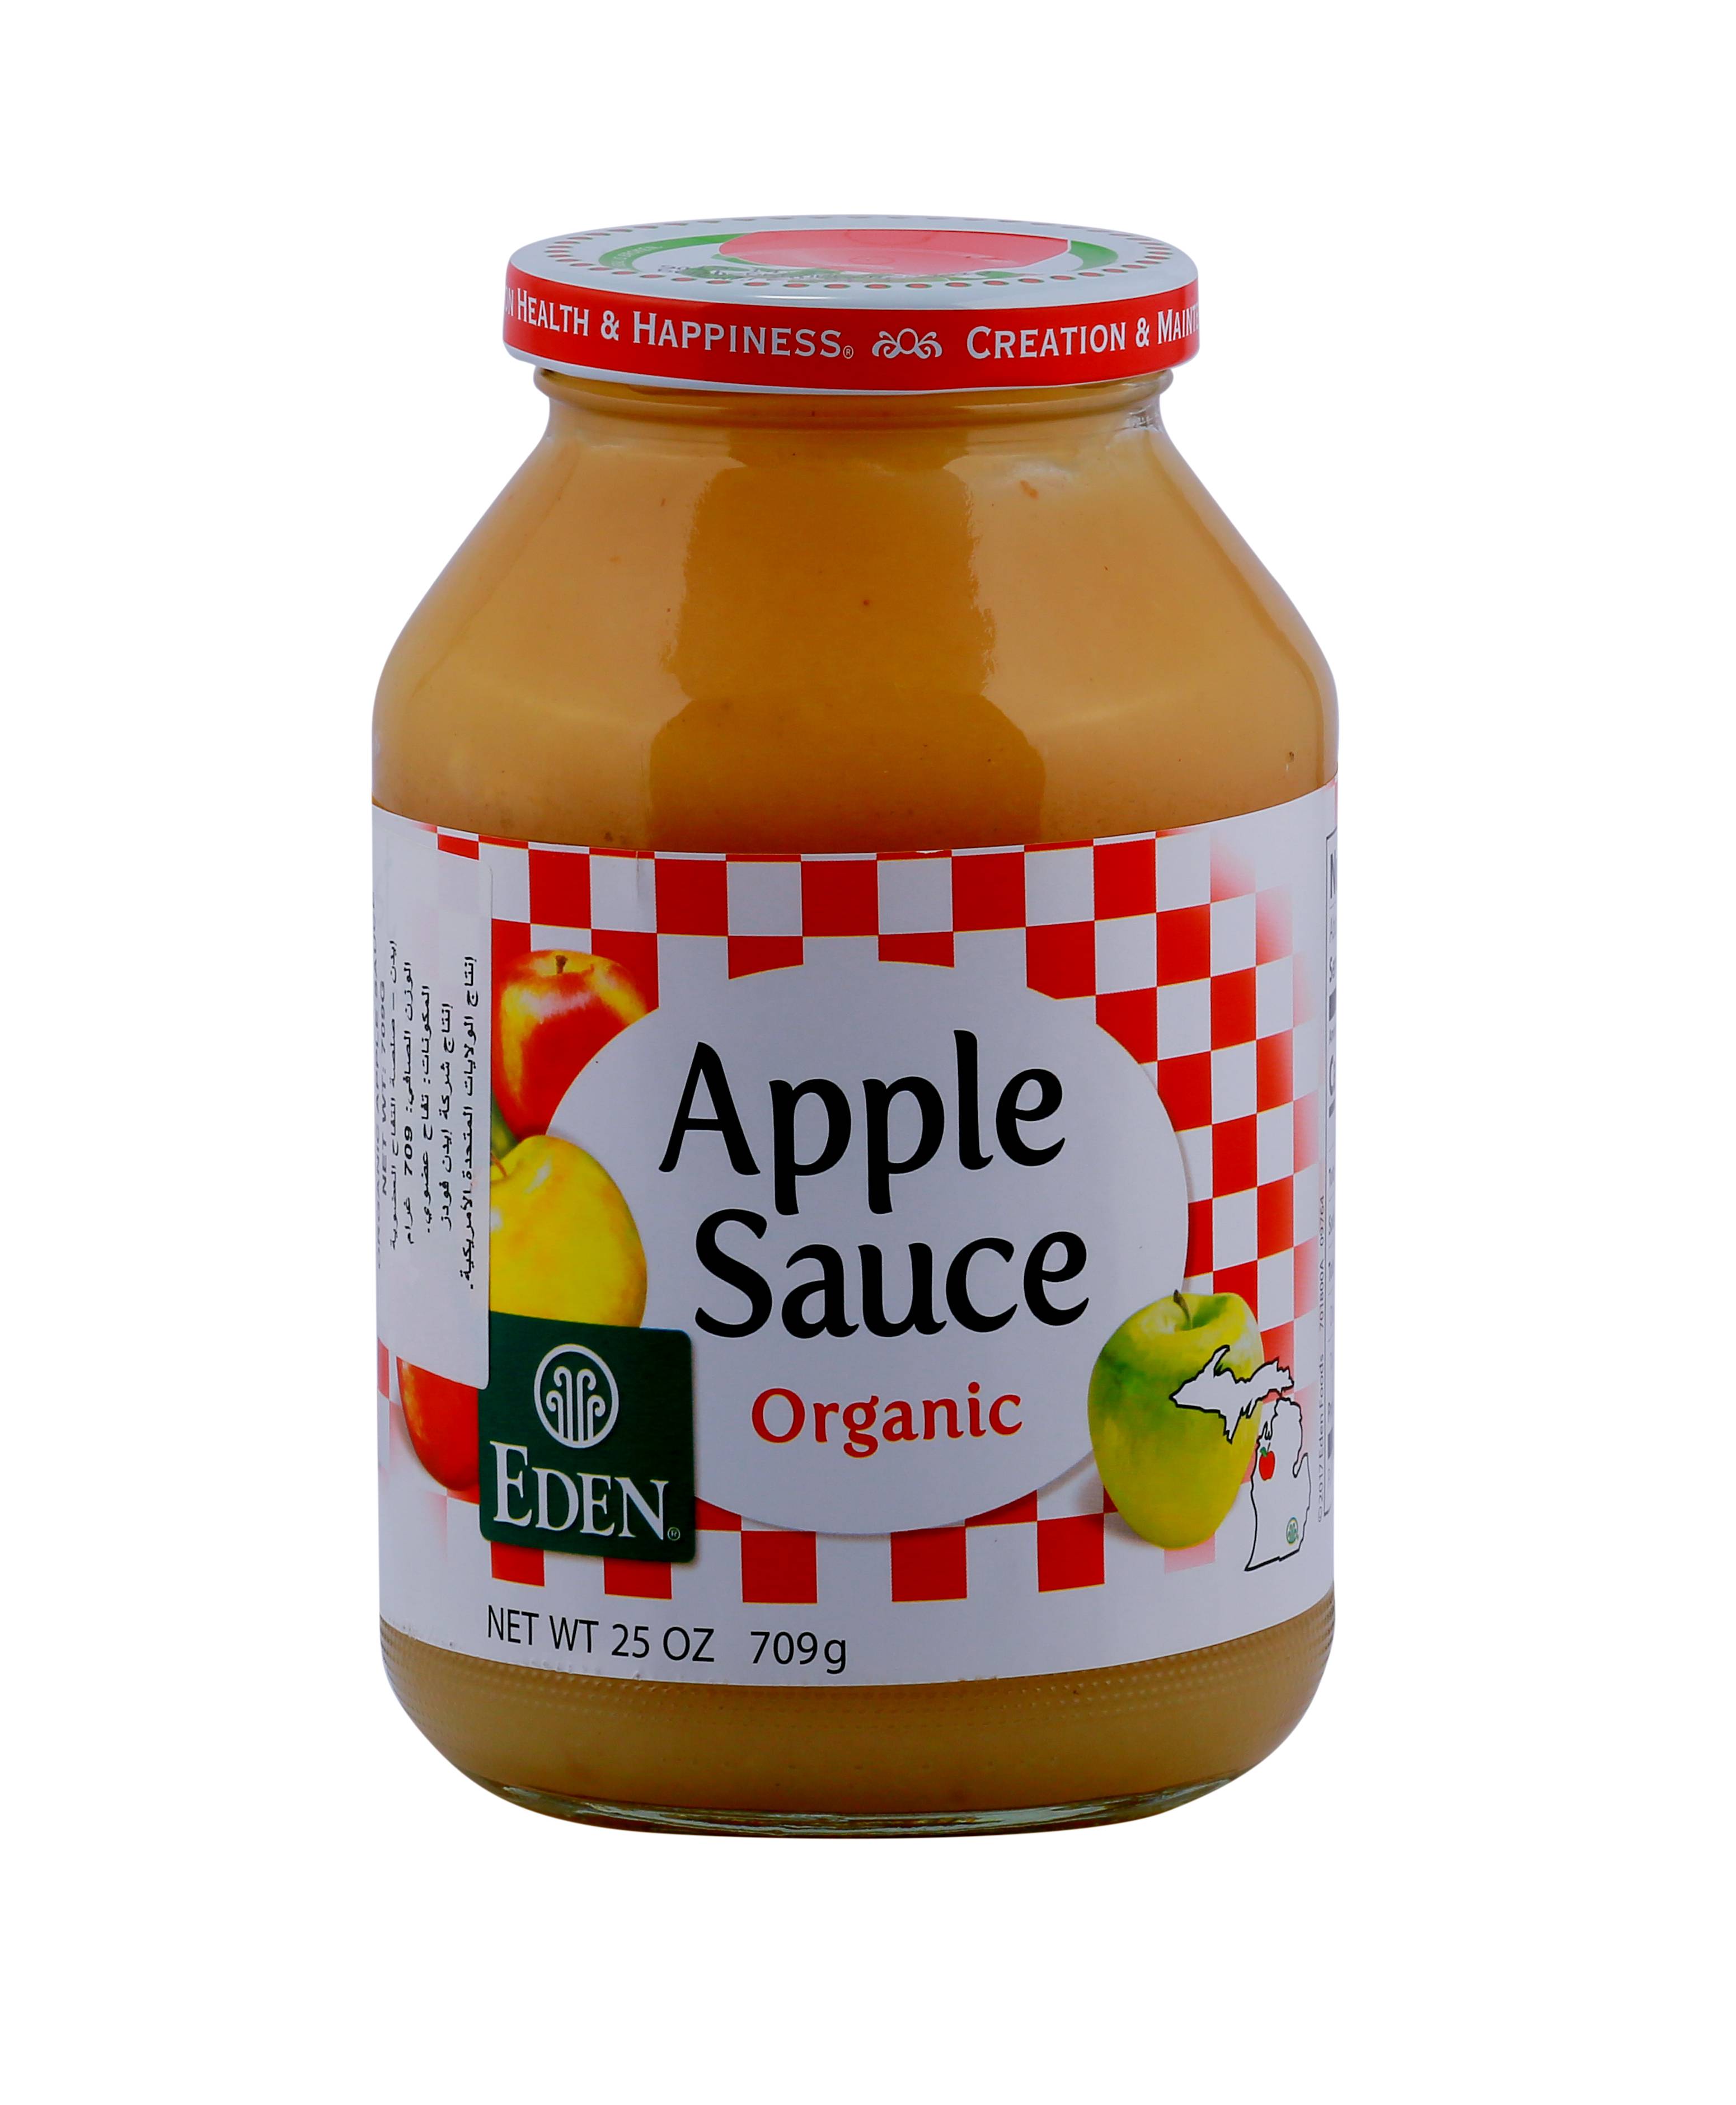 EDEN Apple Sauce Organic, 709g